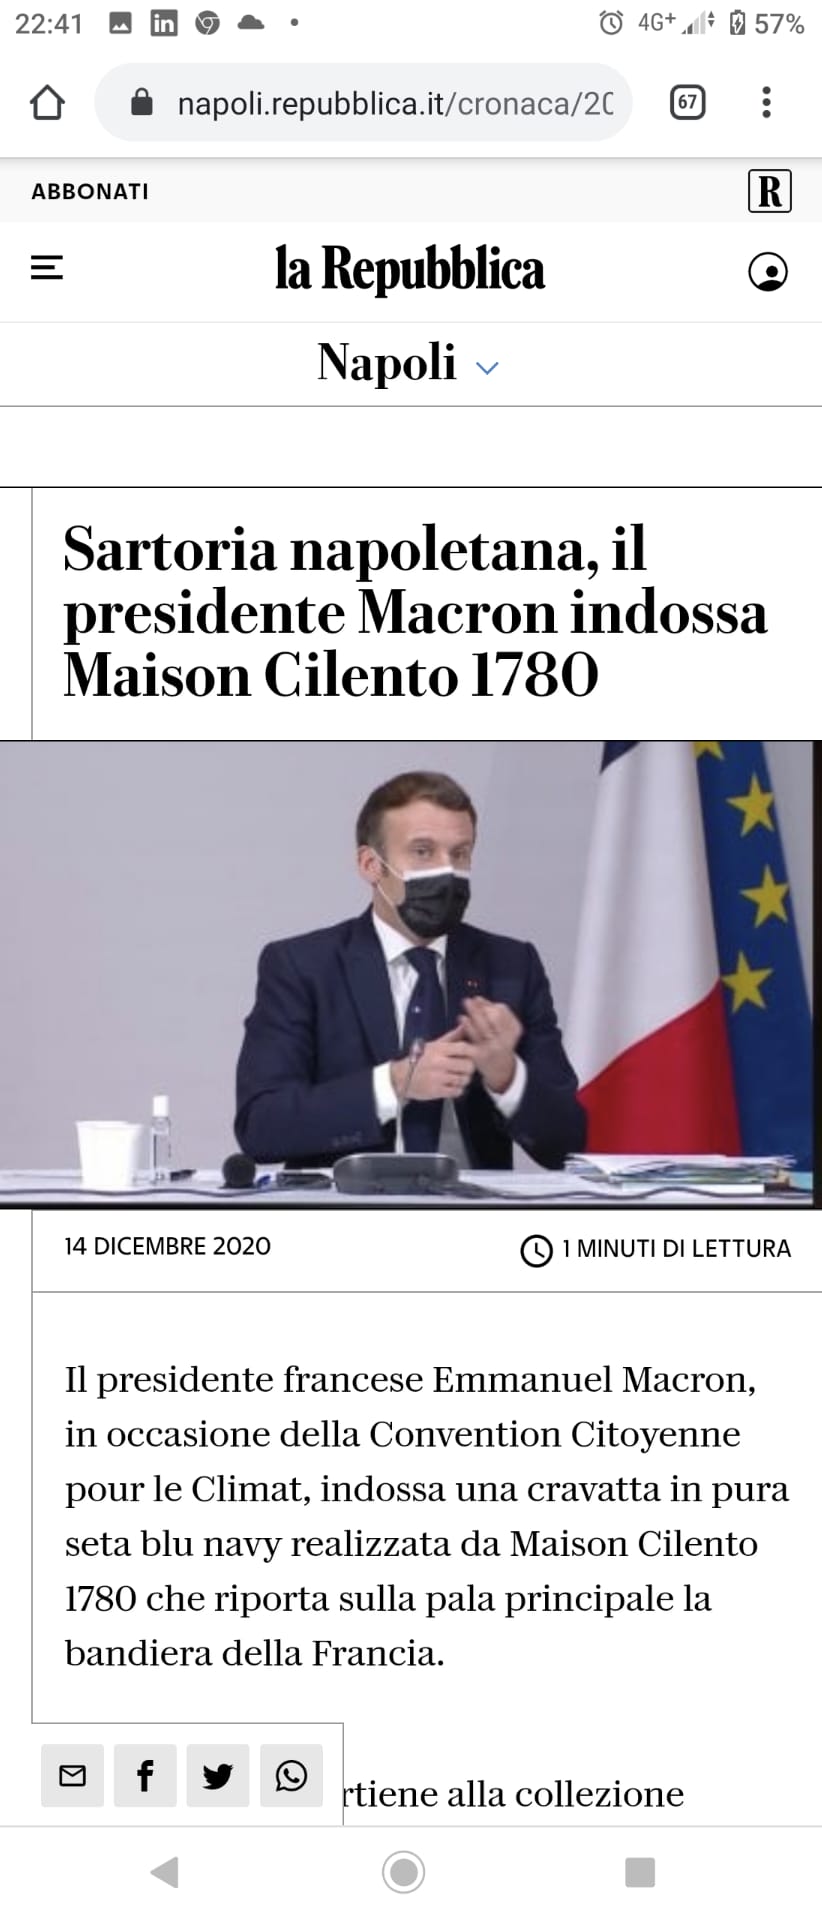 Salotto Cilento Macron